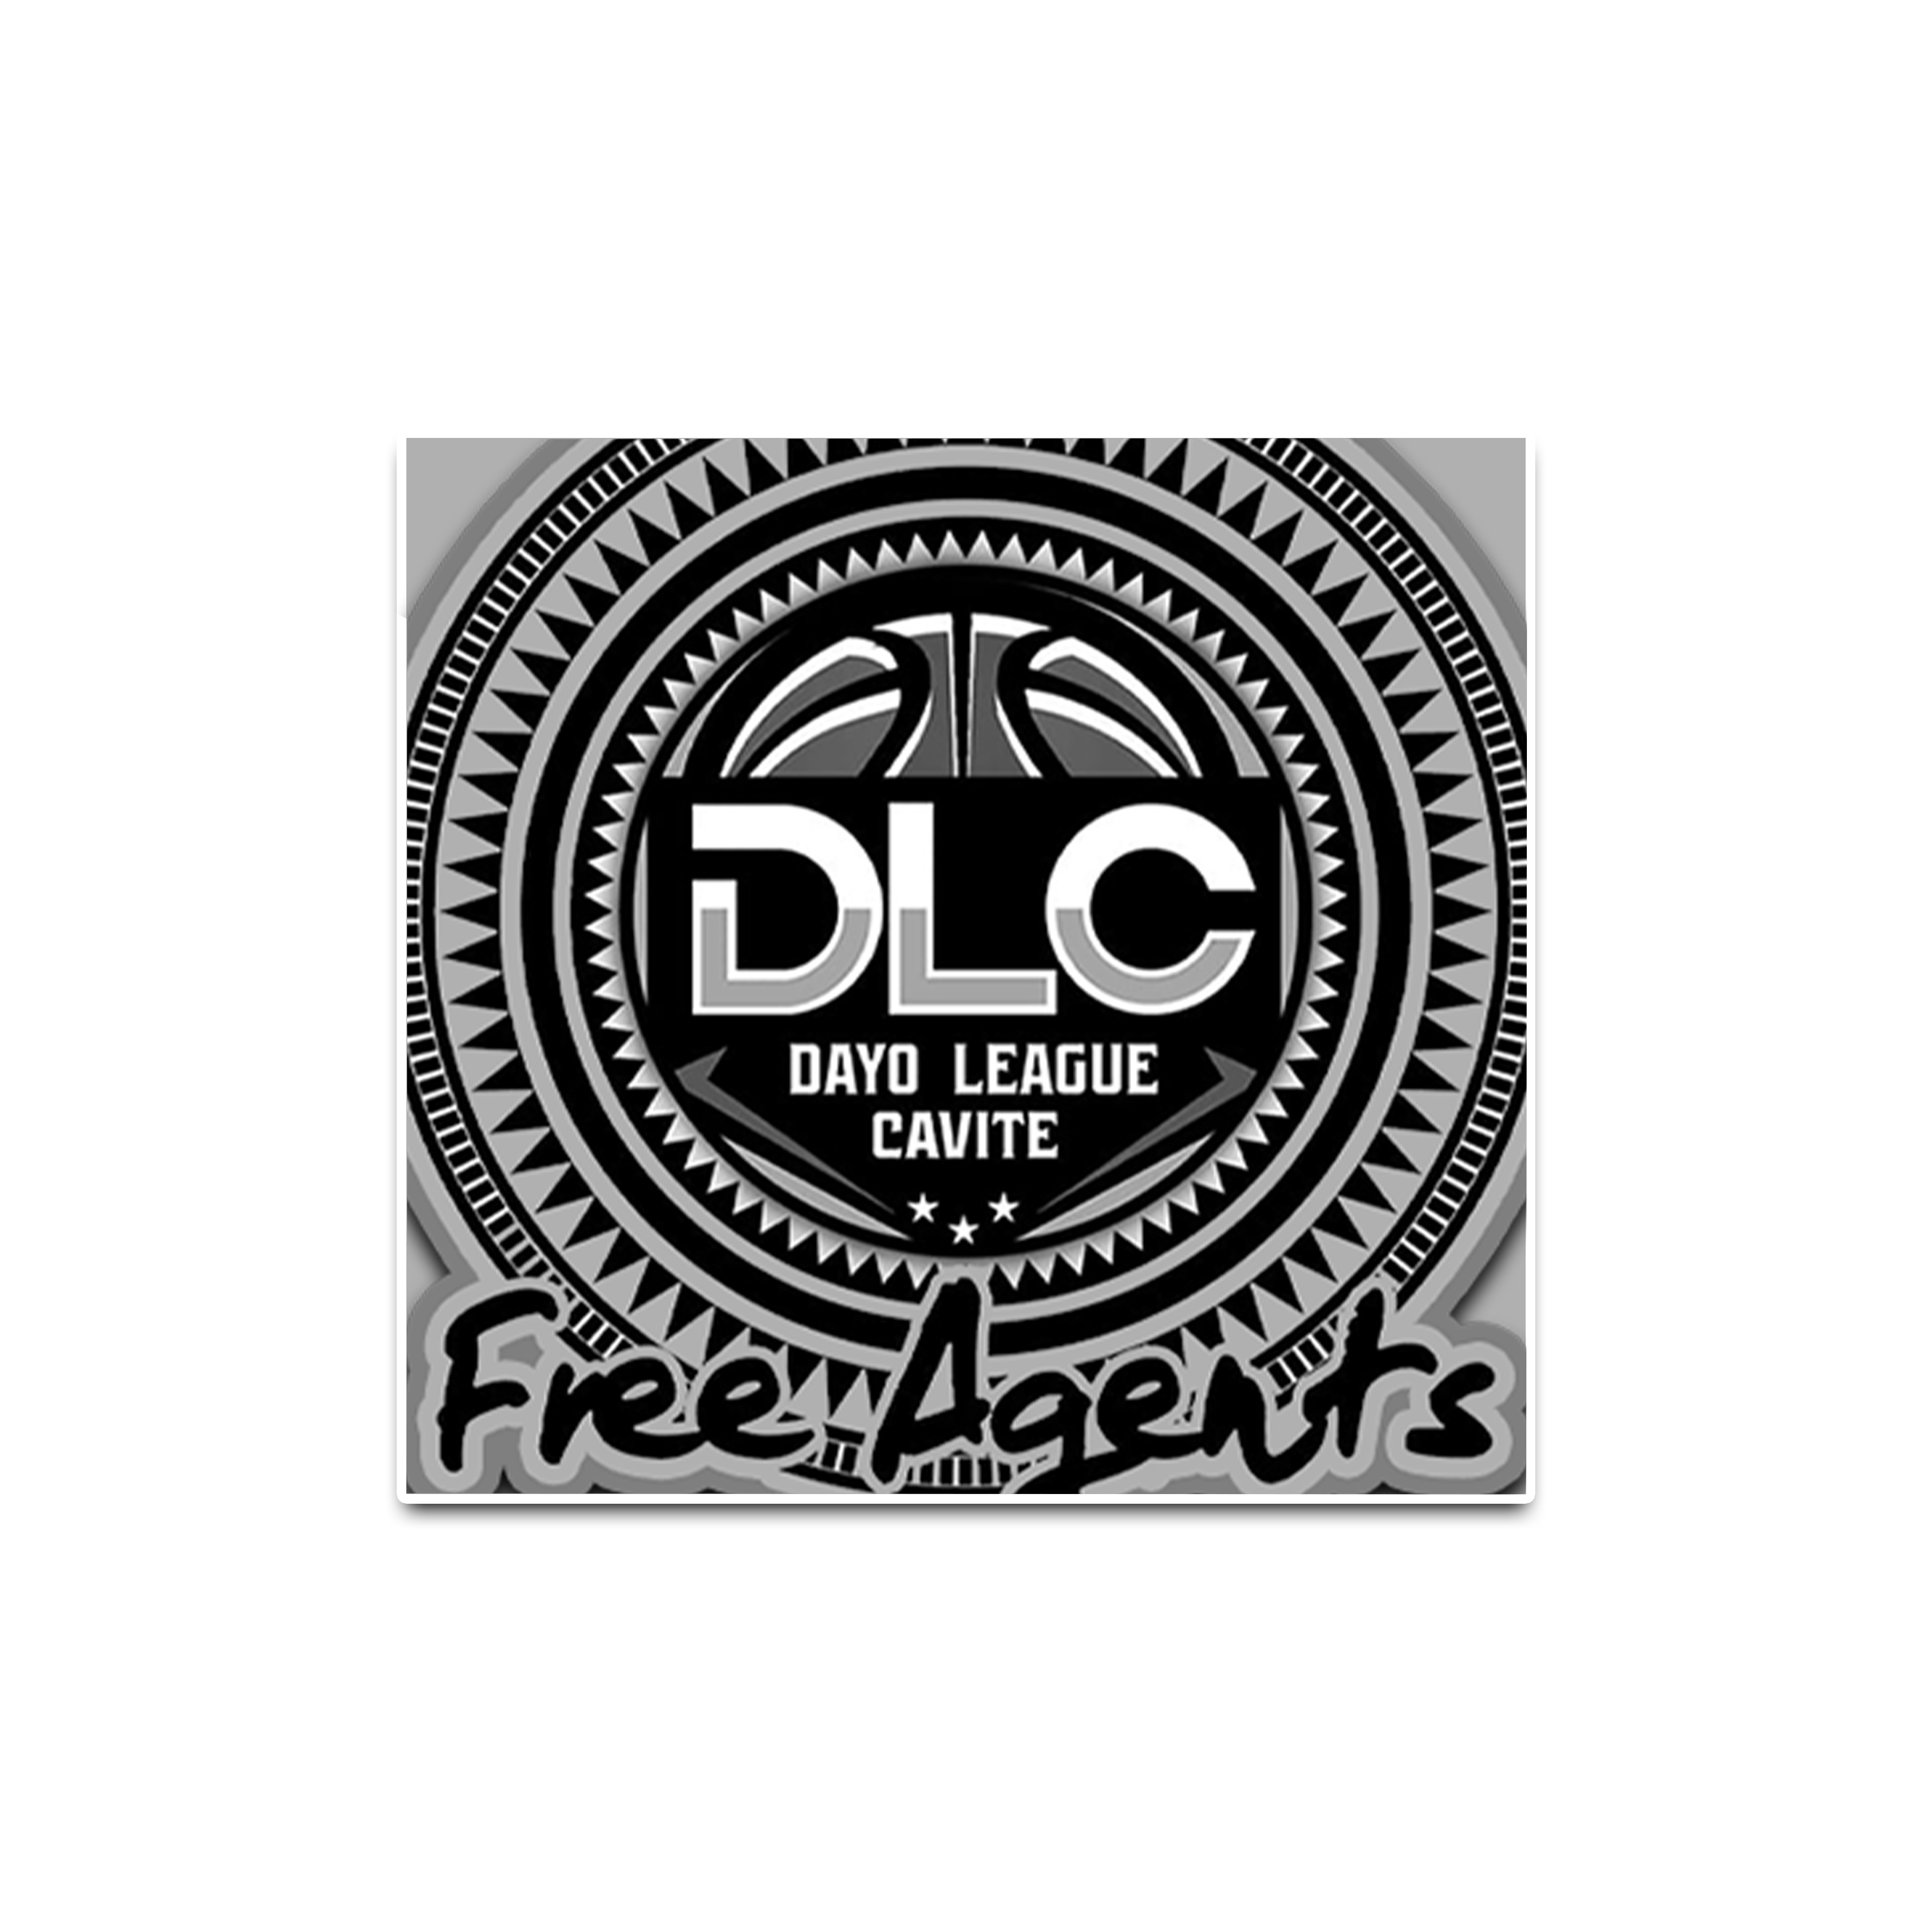 BBA DLC free agent